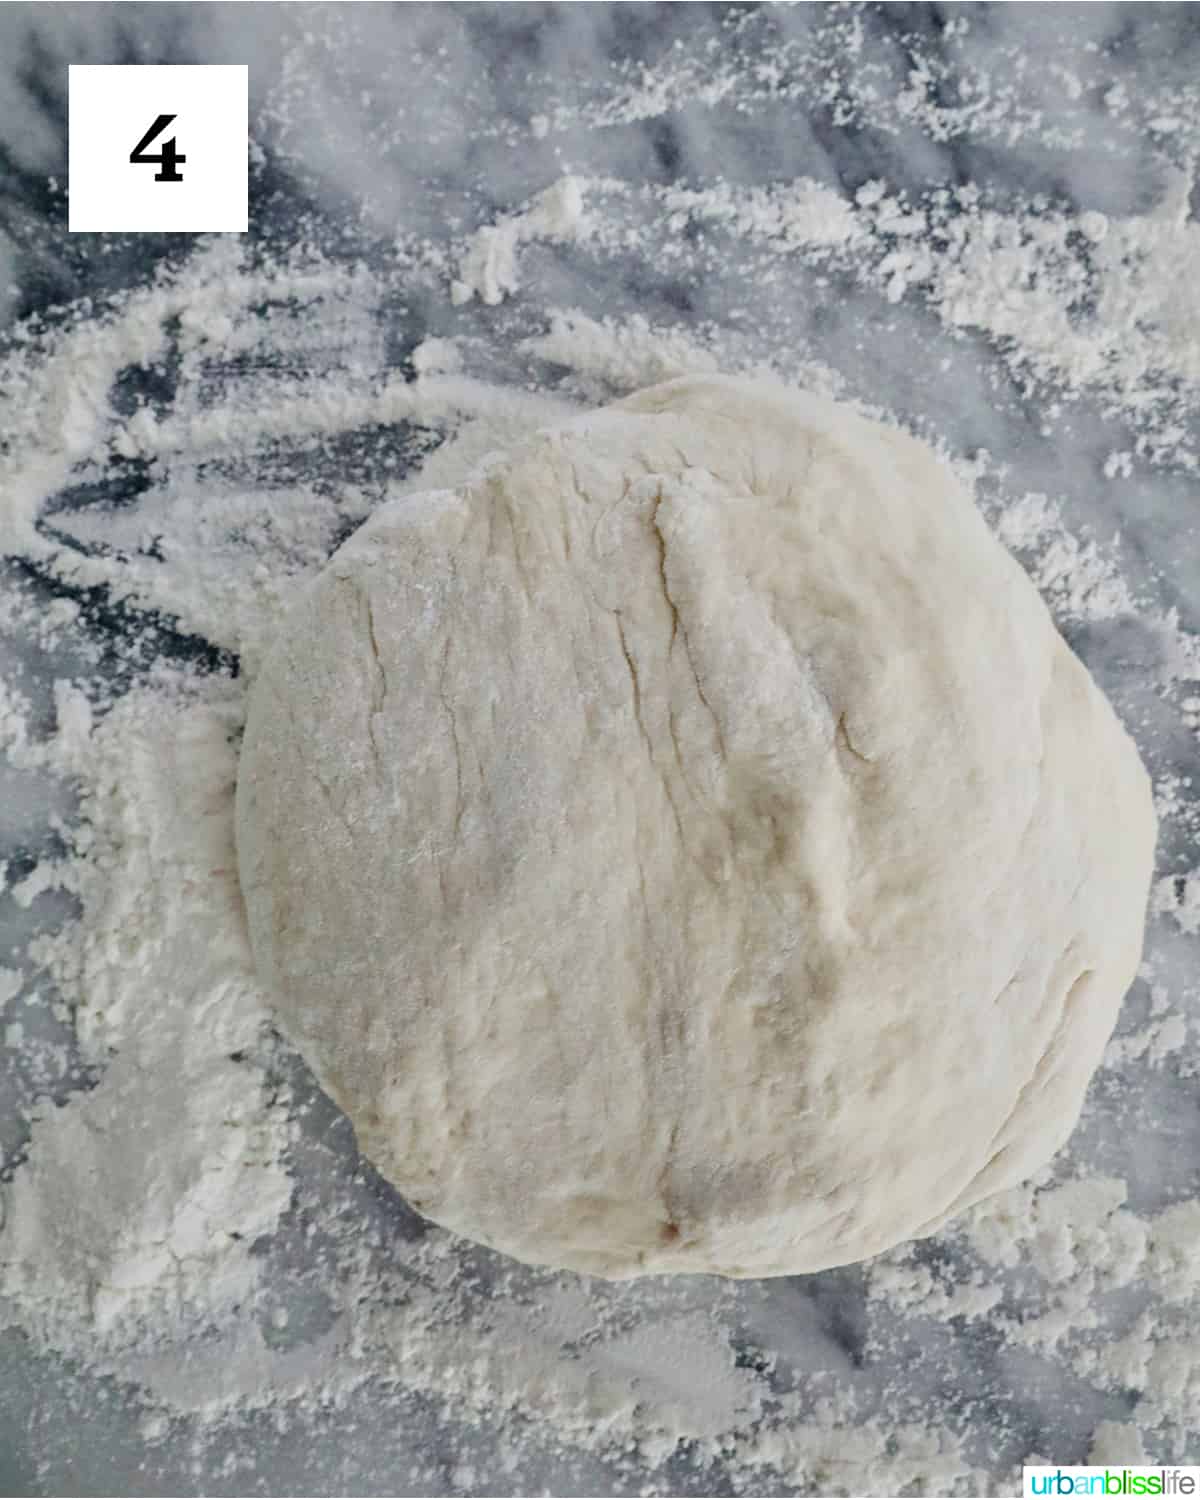 homemade French bread dough ball on a floured marble countertop.